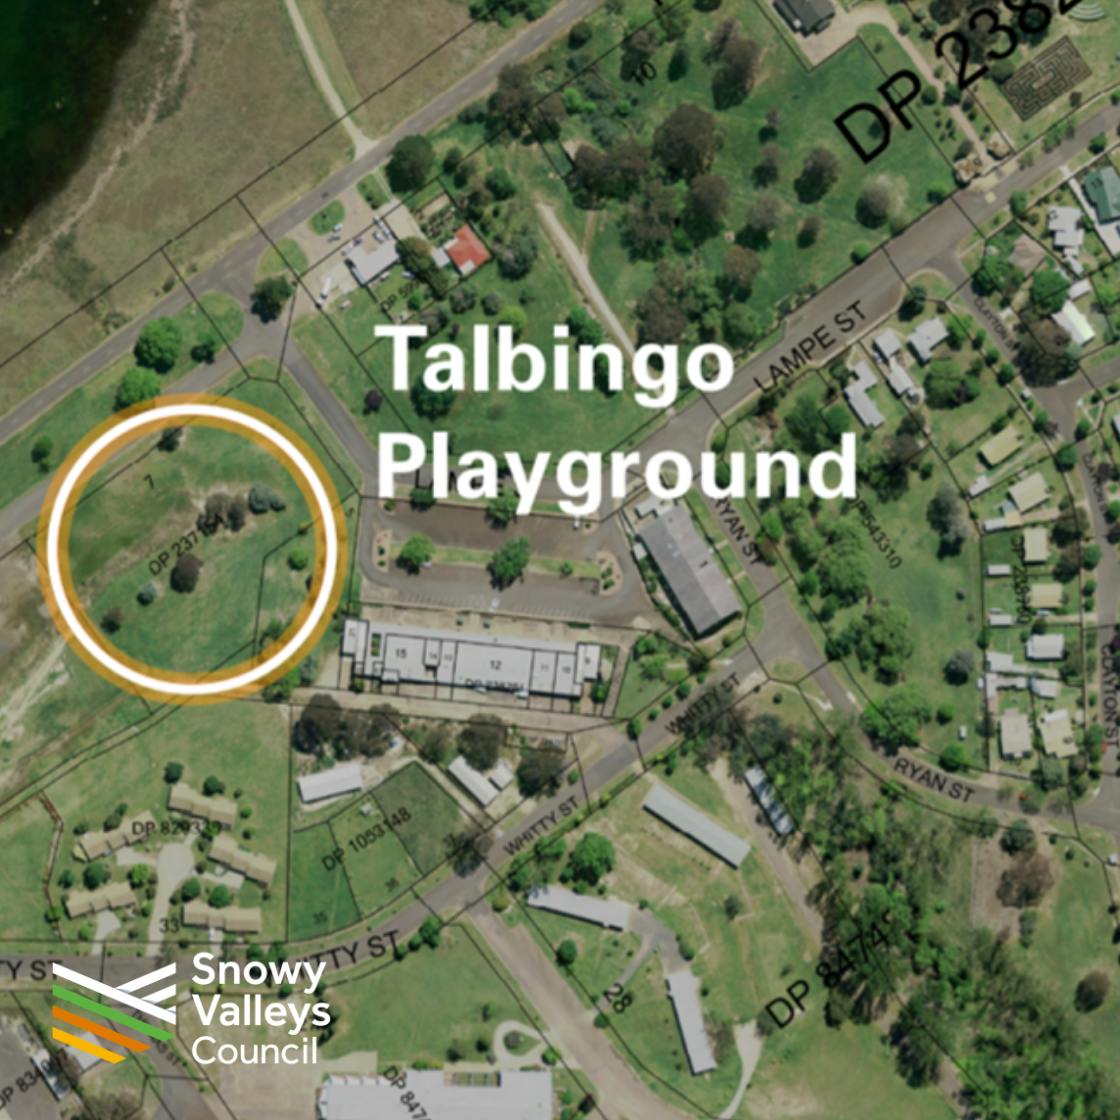 Talbingo playground image